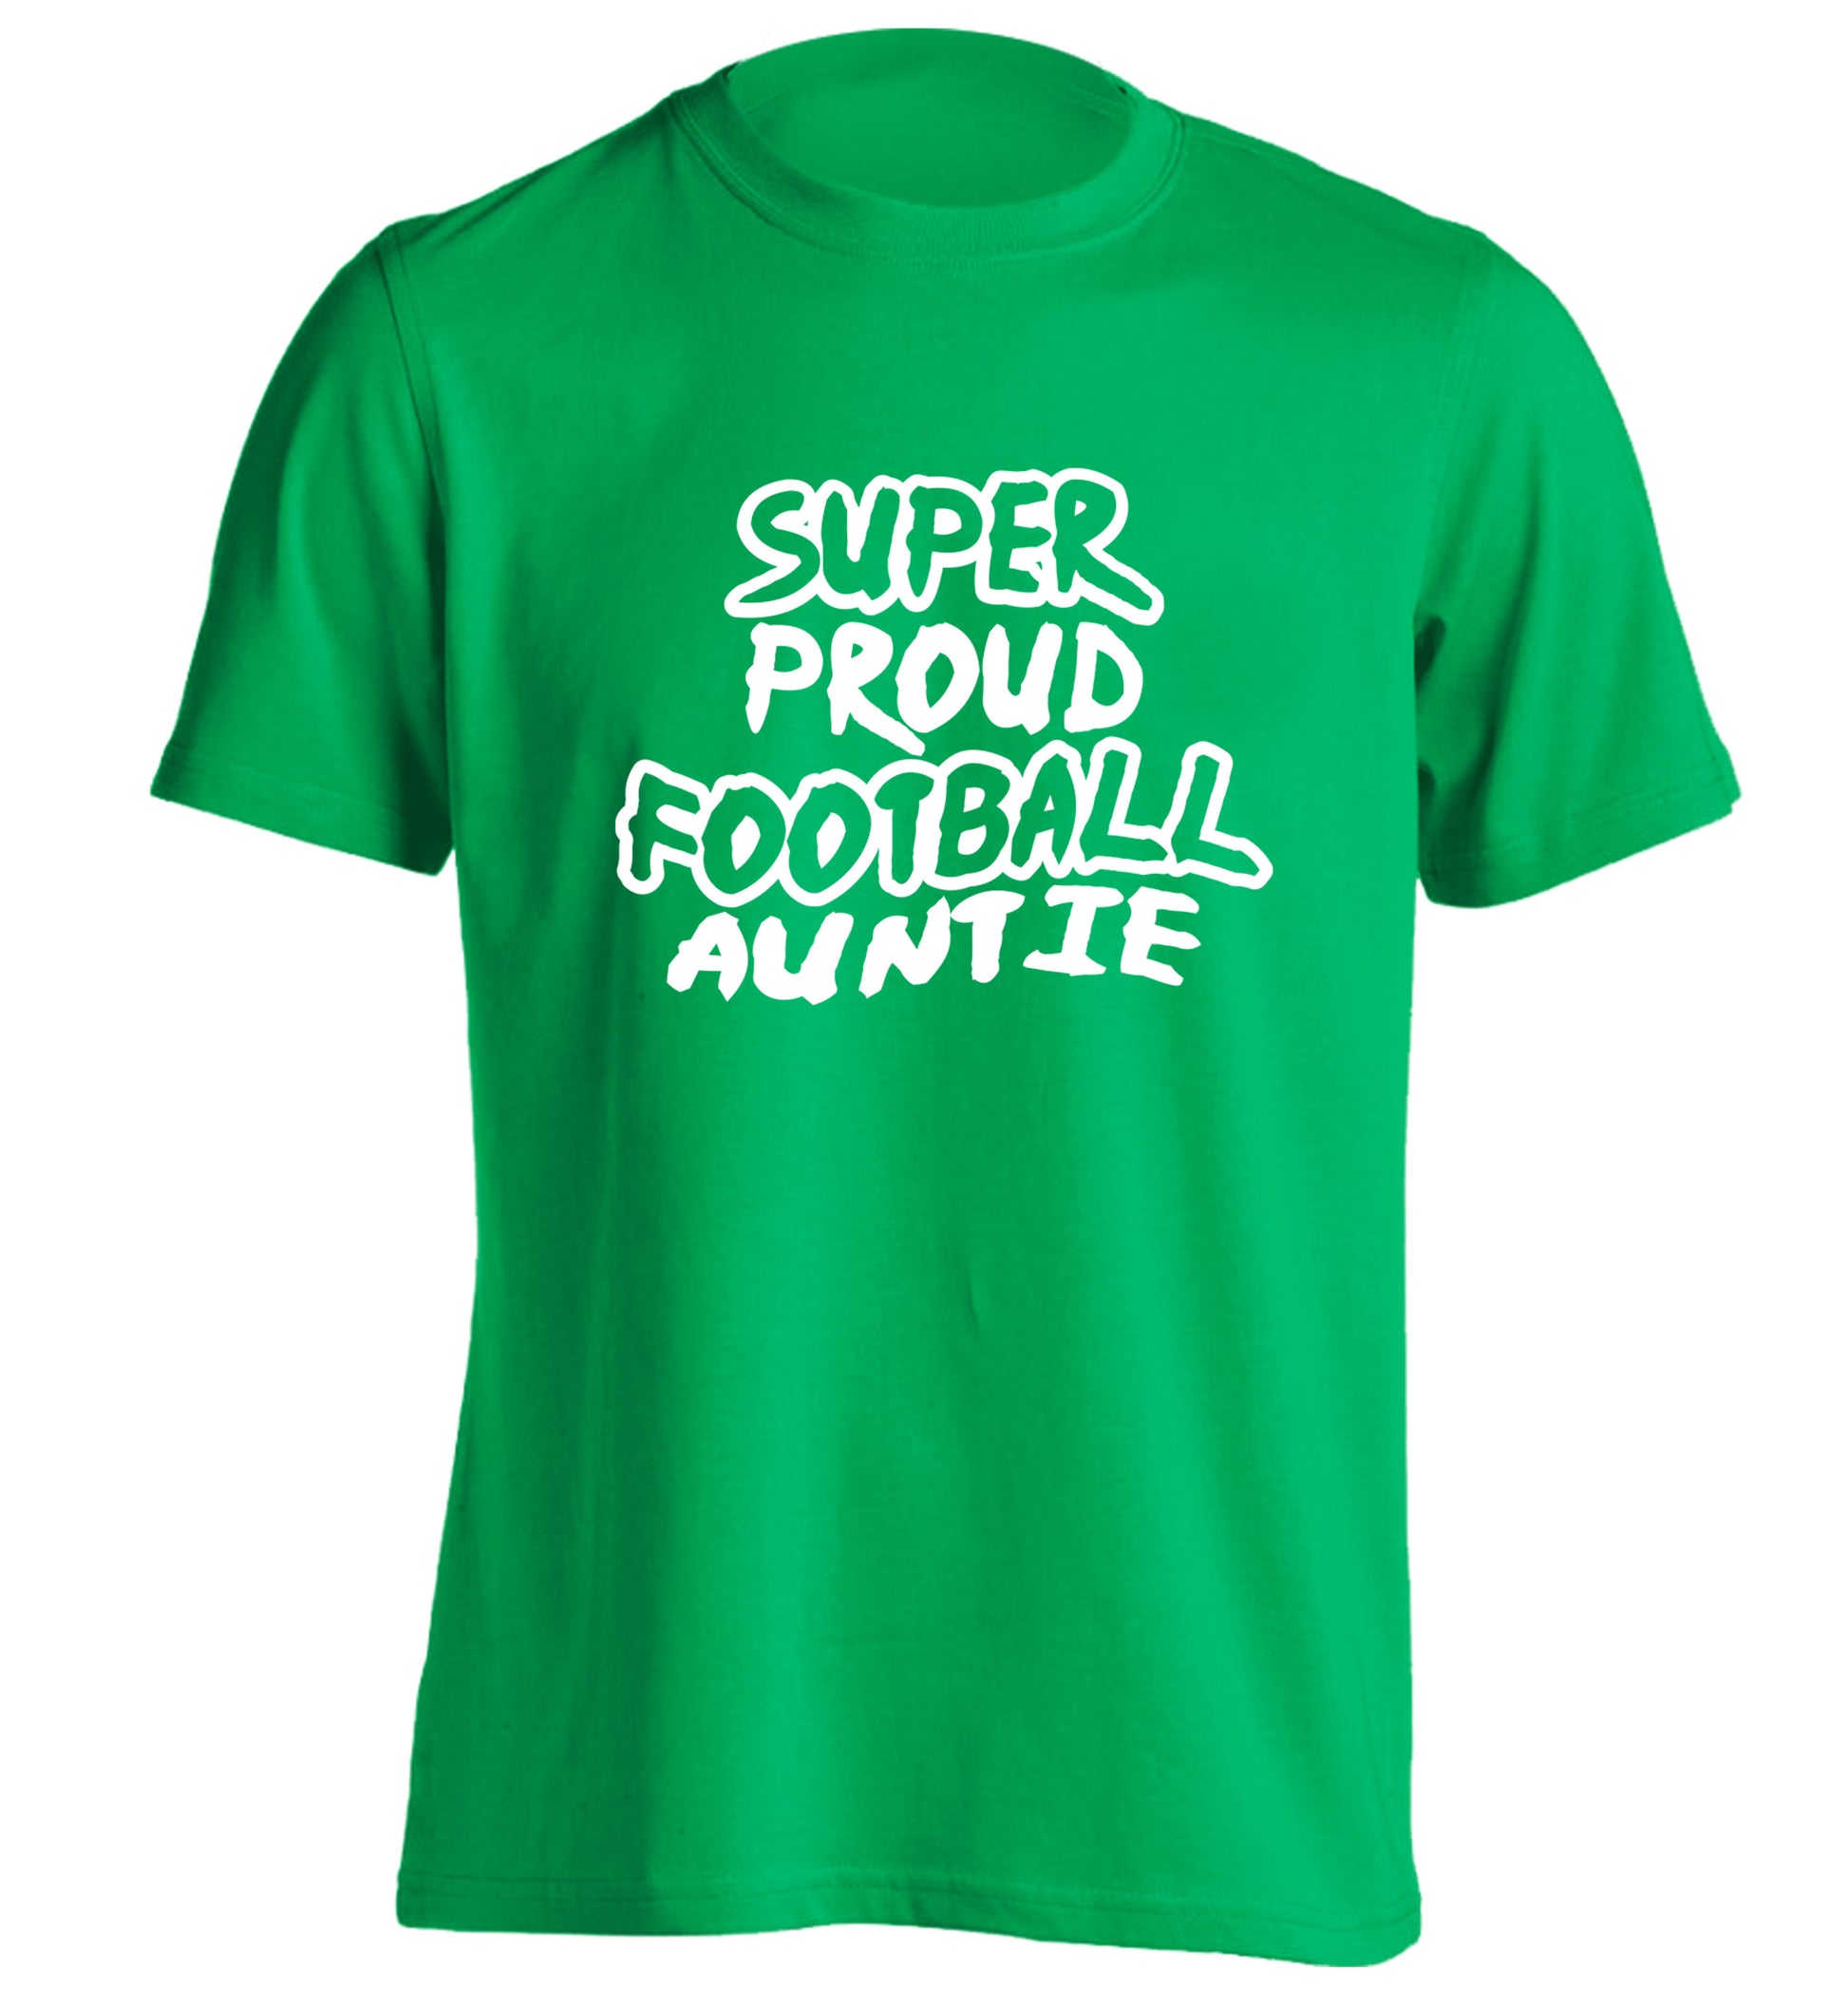 Super proud football auntie adults unisexgreen Tshirt 2XL